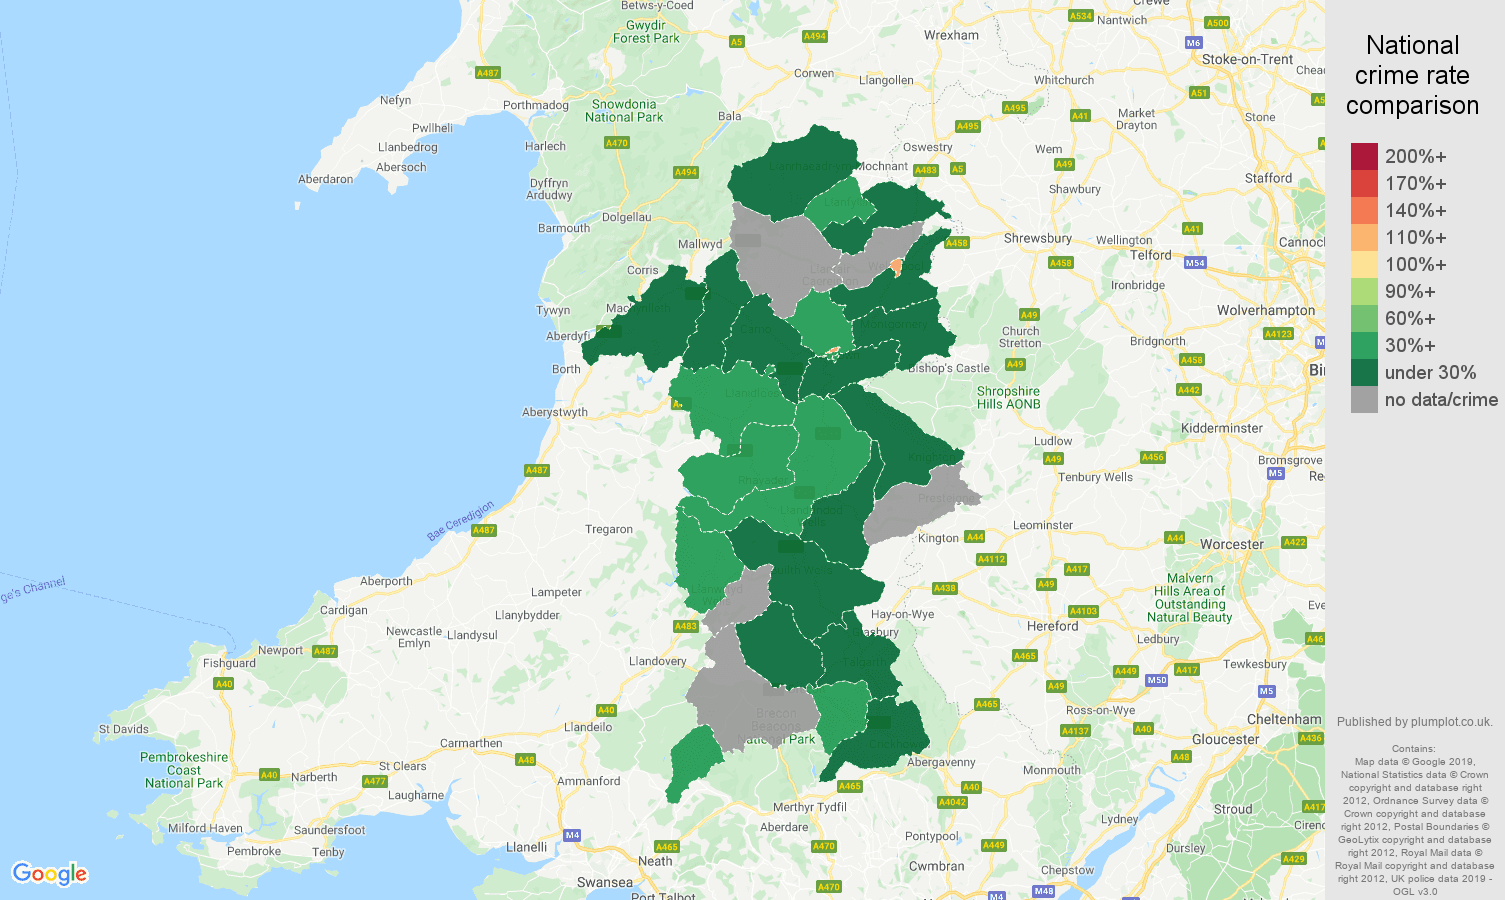 Powys shoplifting crime rate comparison map